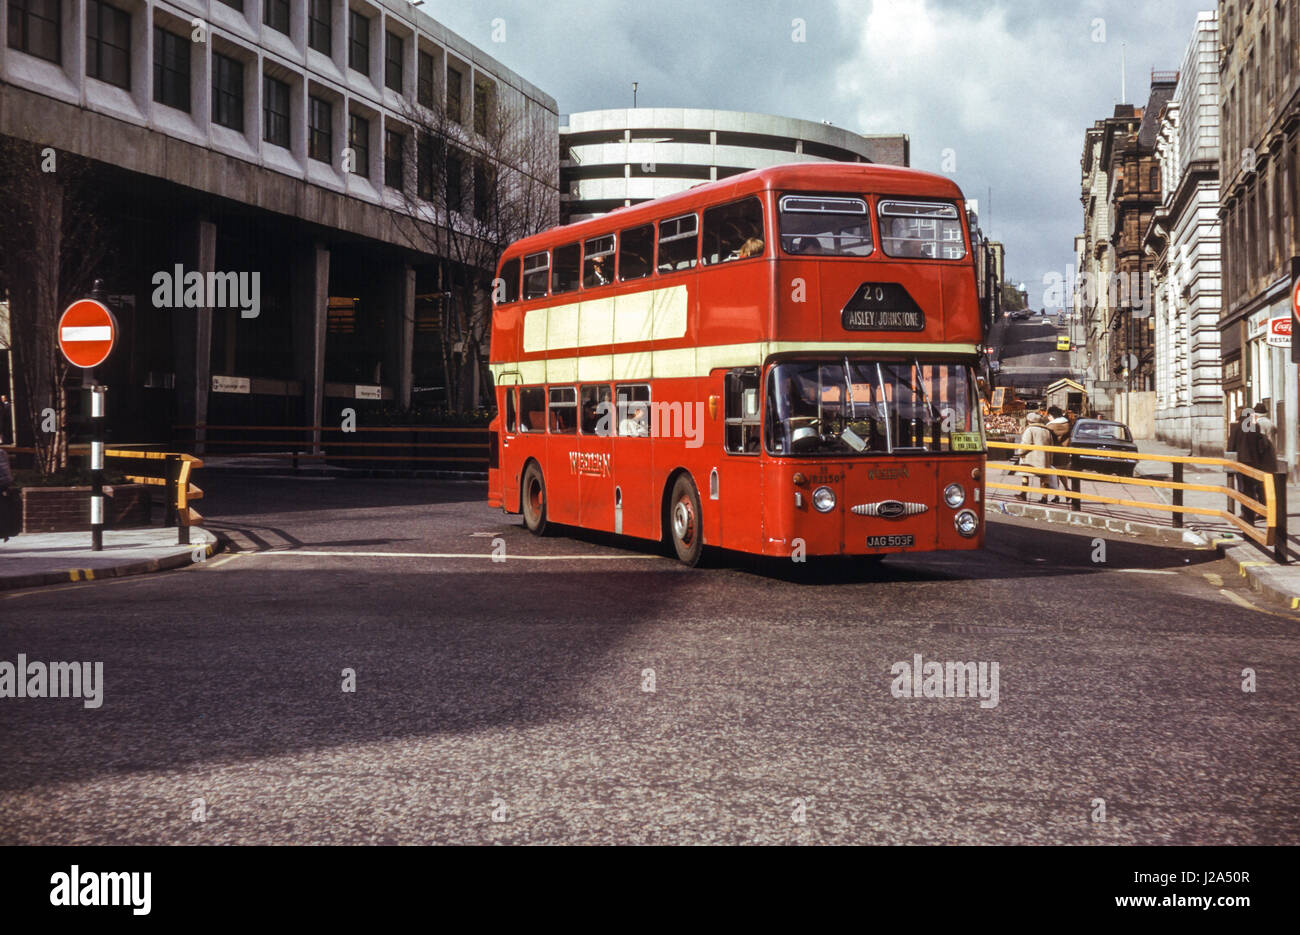 Glasgow, Reino Unido - 1973: Vintage imagen del autobús en las calles de Glasgow en 1973. SMT occidental Daimler flota Fleetline serie 2150 (número de registro JAG503F). Foto de stock